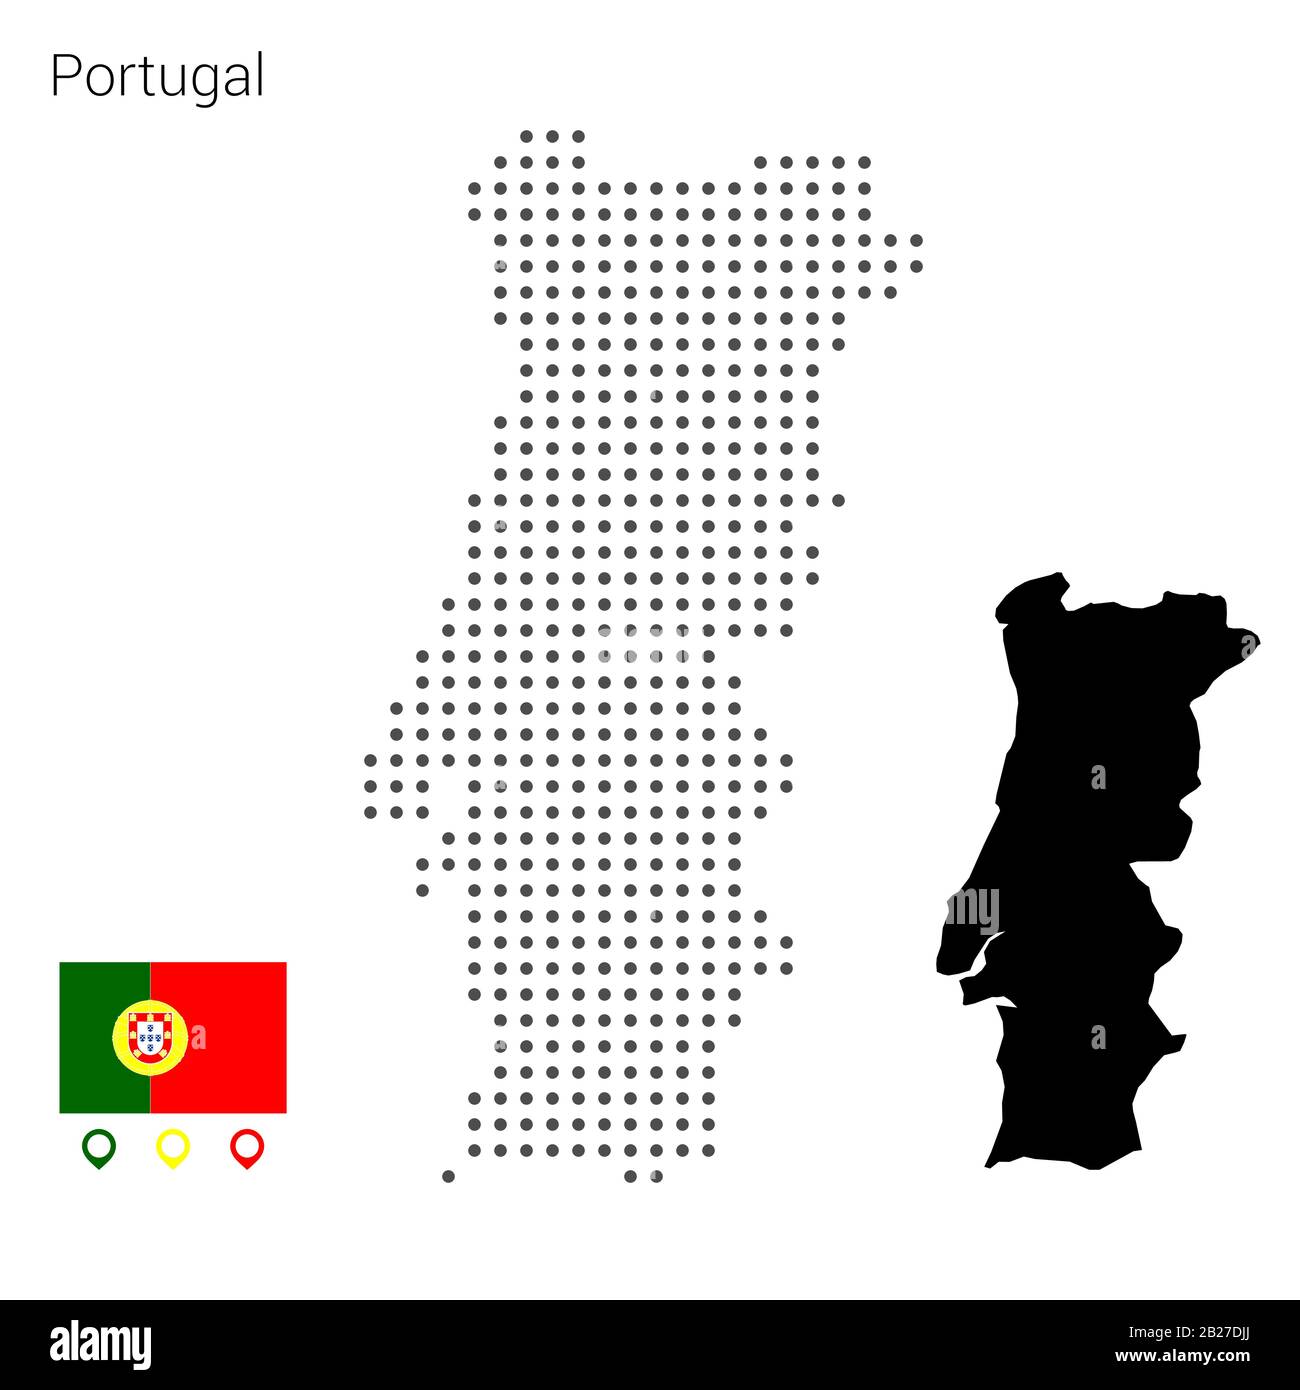 Vector Map Portugal Districts Autonomous Regions Subdivided Municipalities  Each Region Stock Vector by ©Jktu_21 175841466